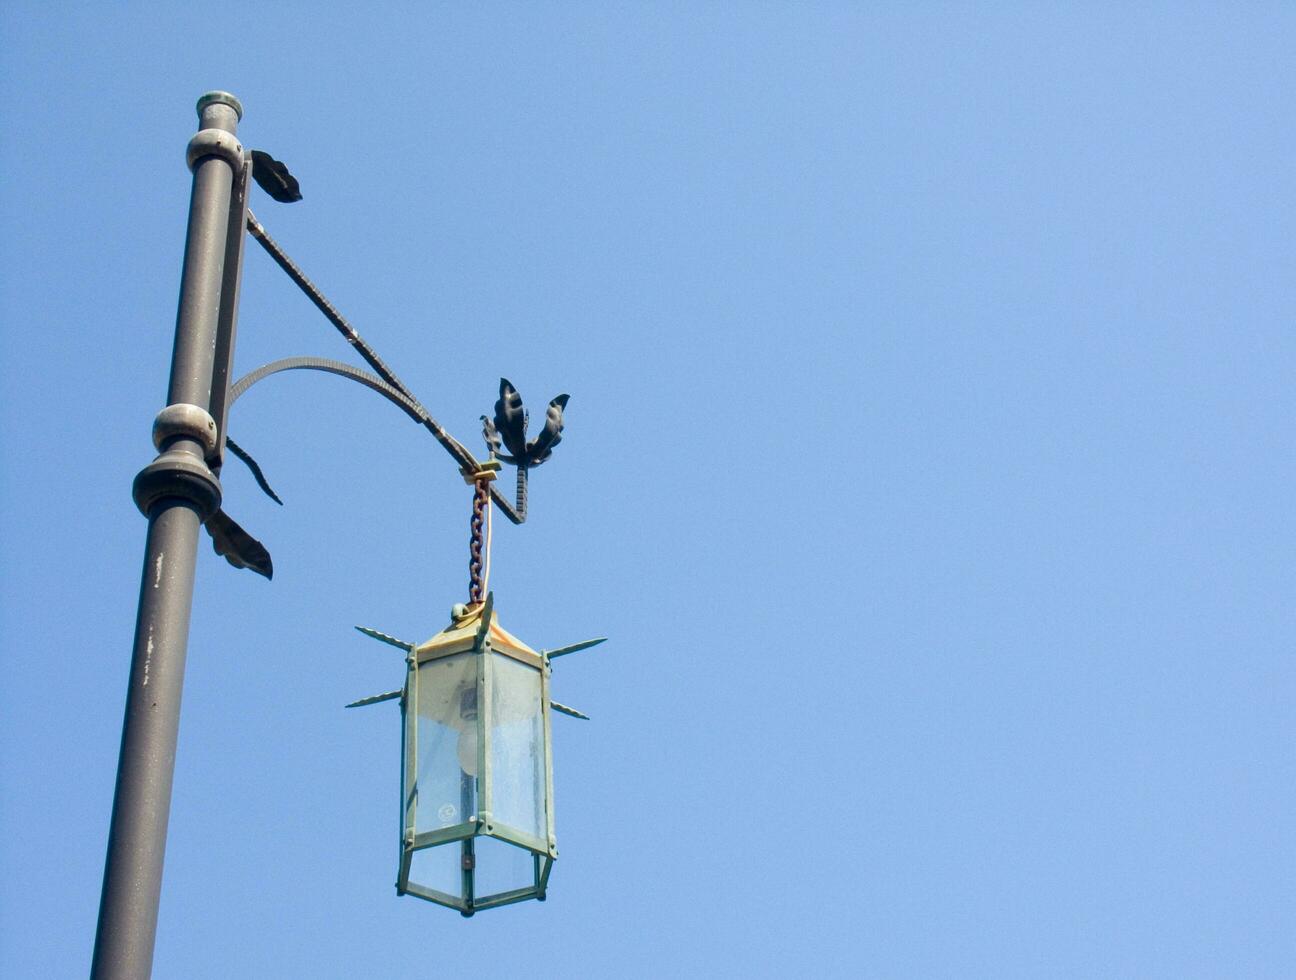 a street light with a bird on it photo